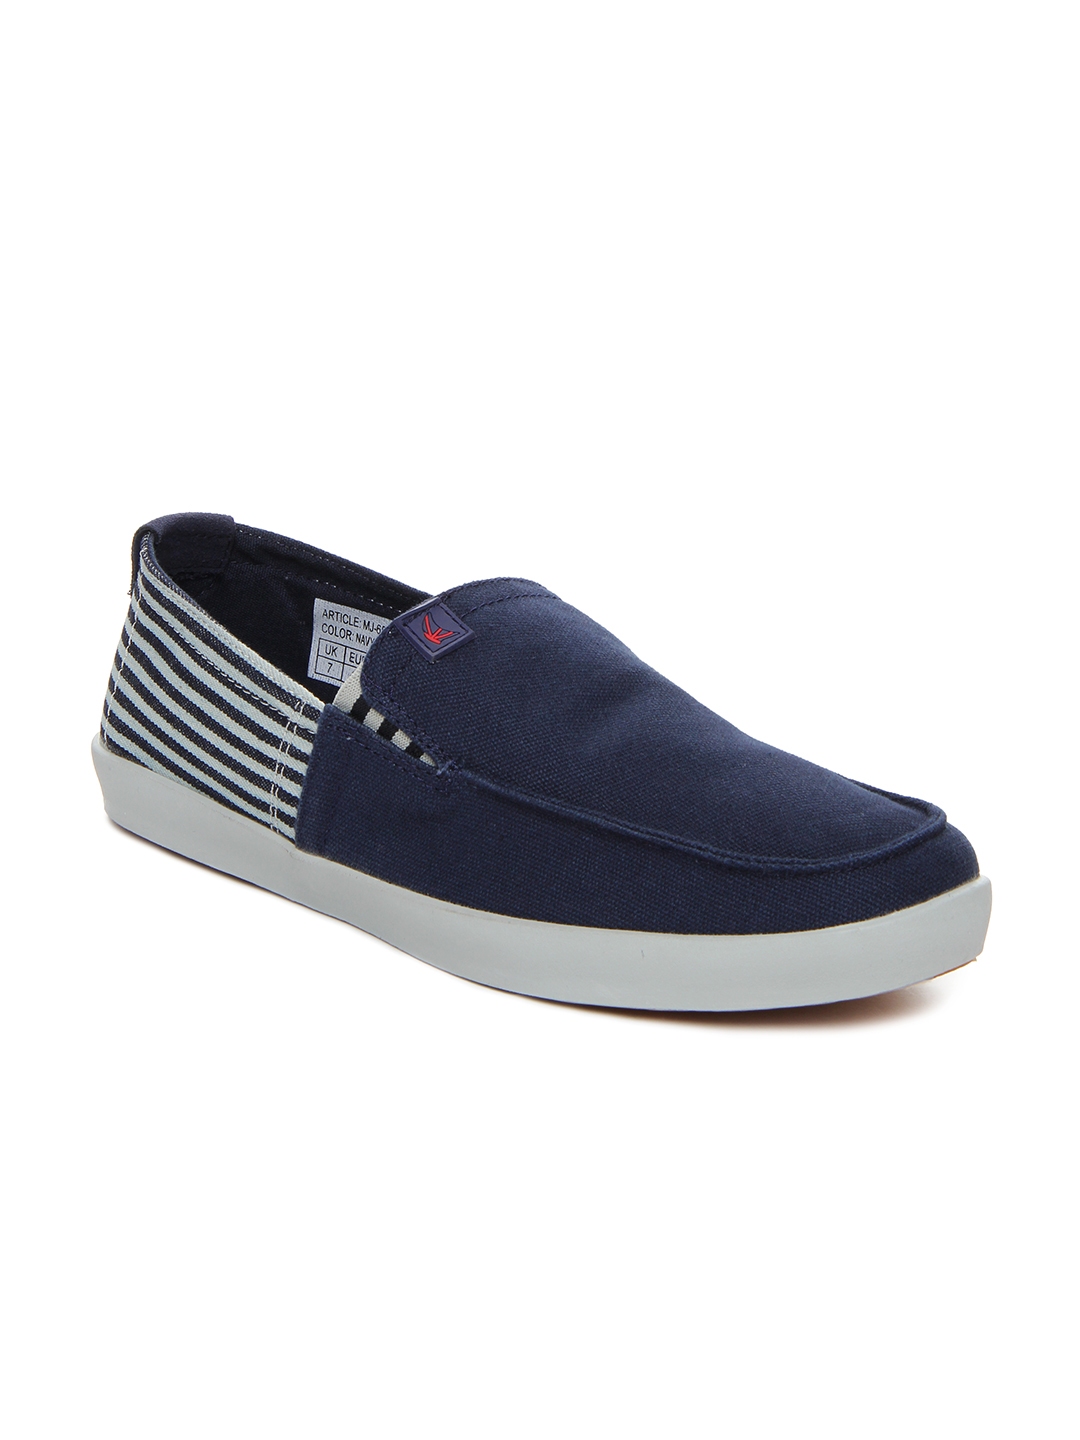 Buy Mast & Harbour Men Navy Blue Casual Shoes - Casual Shoes for Men ...